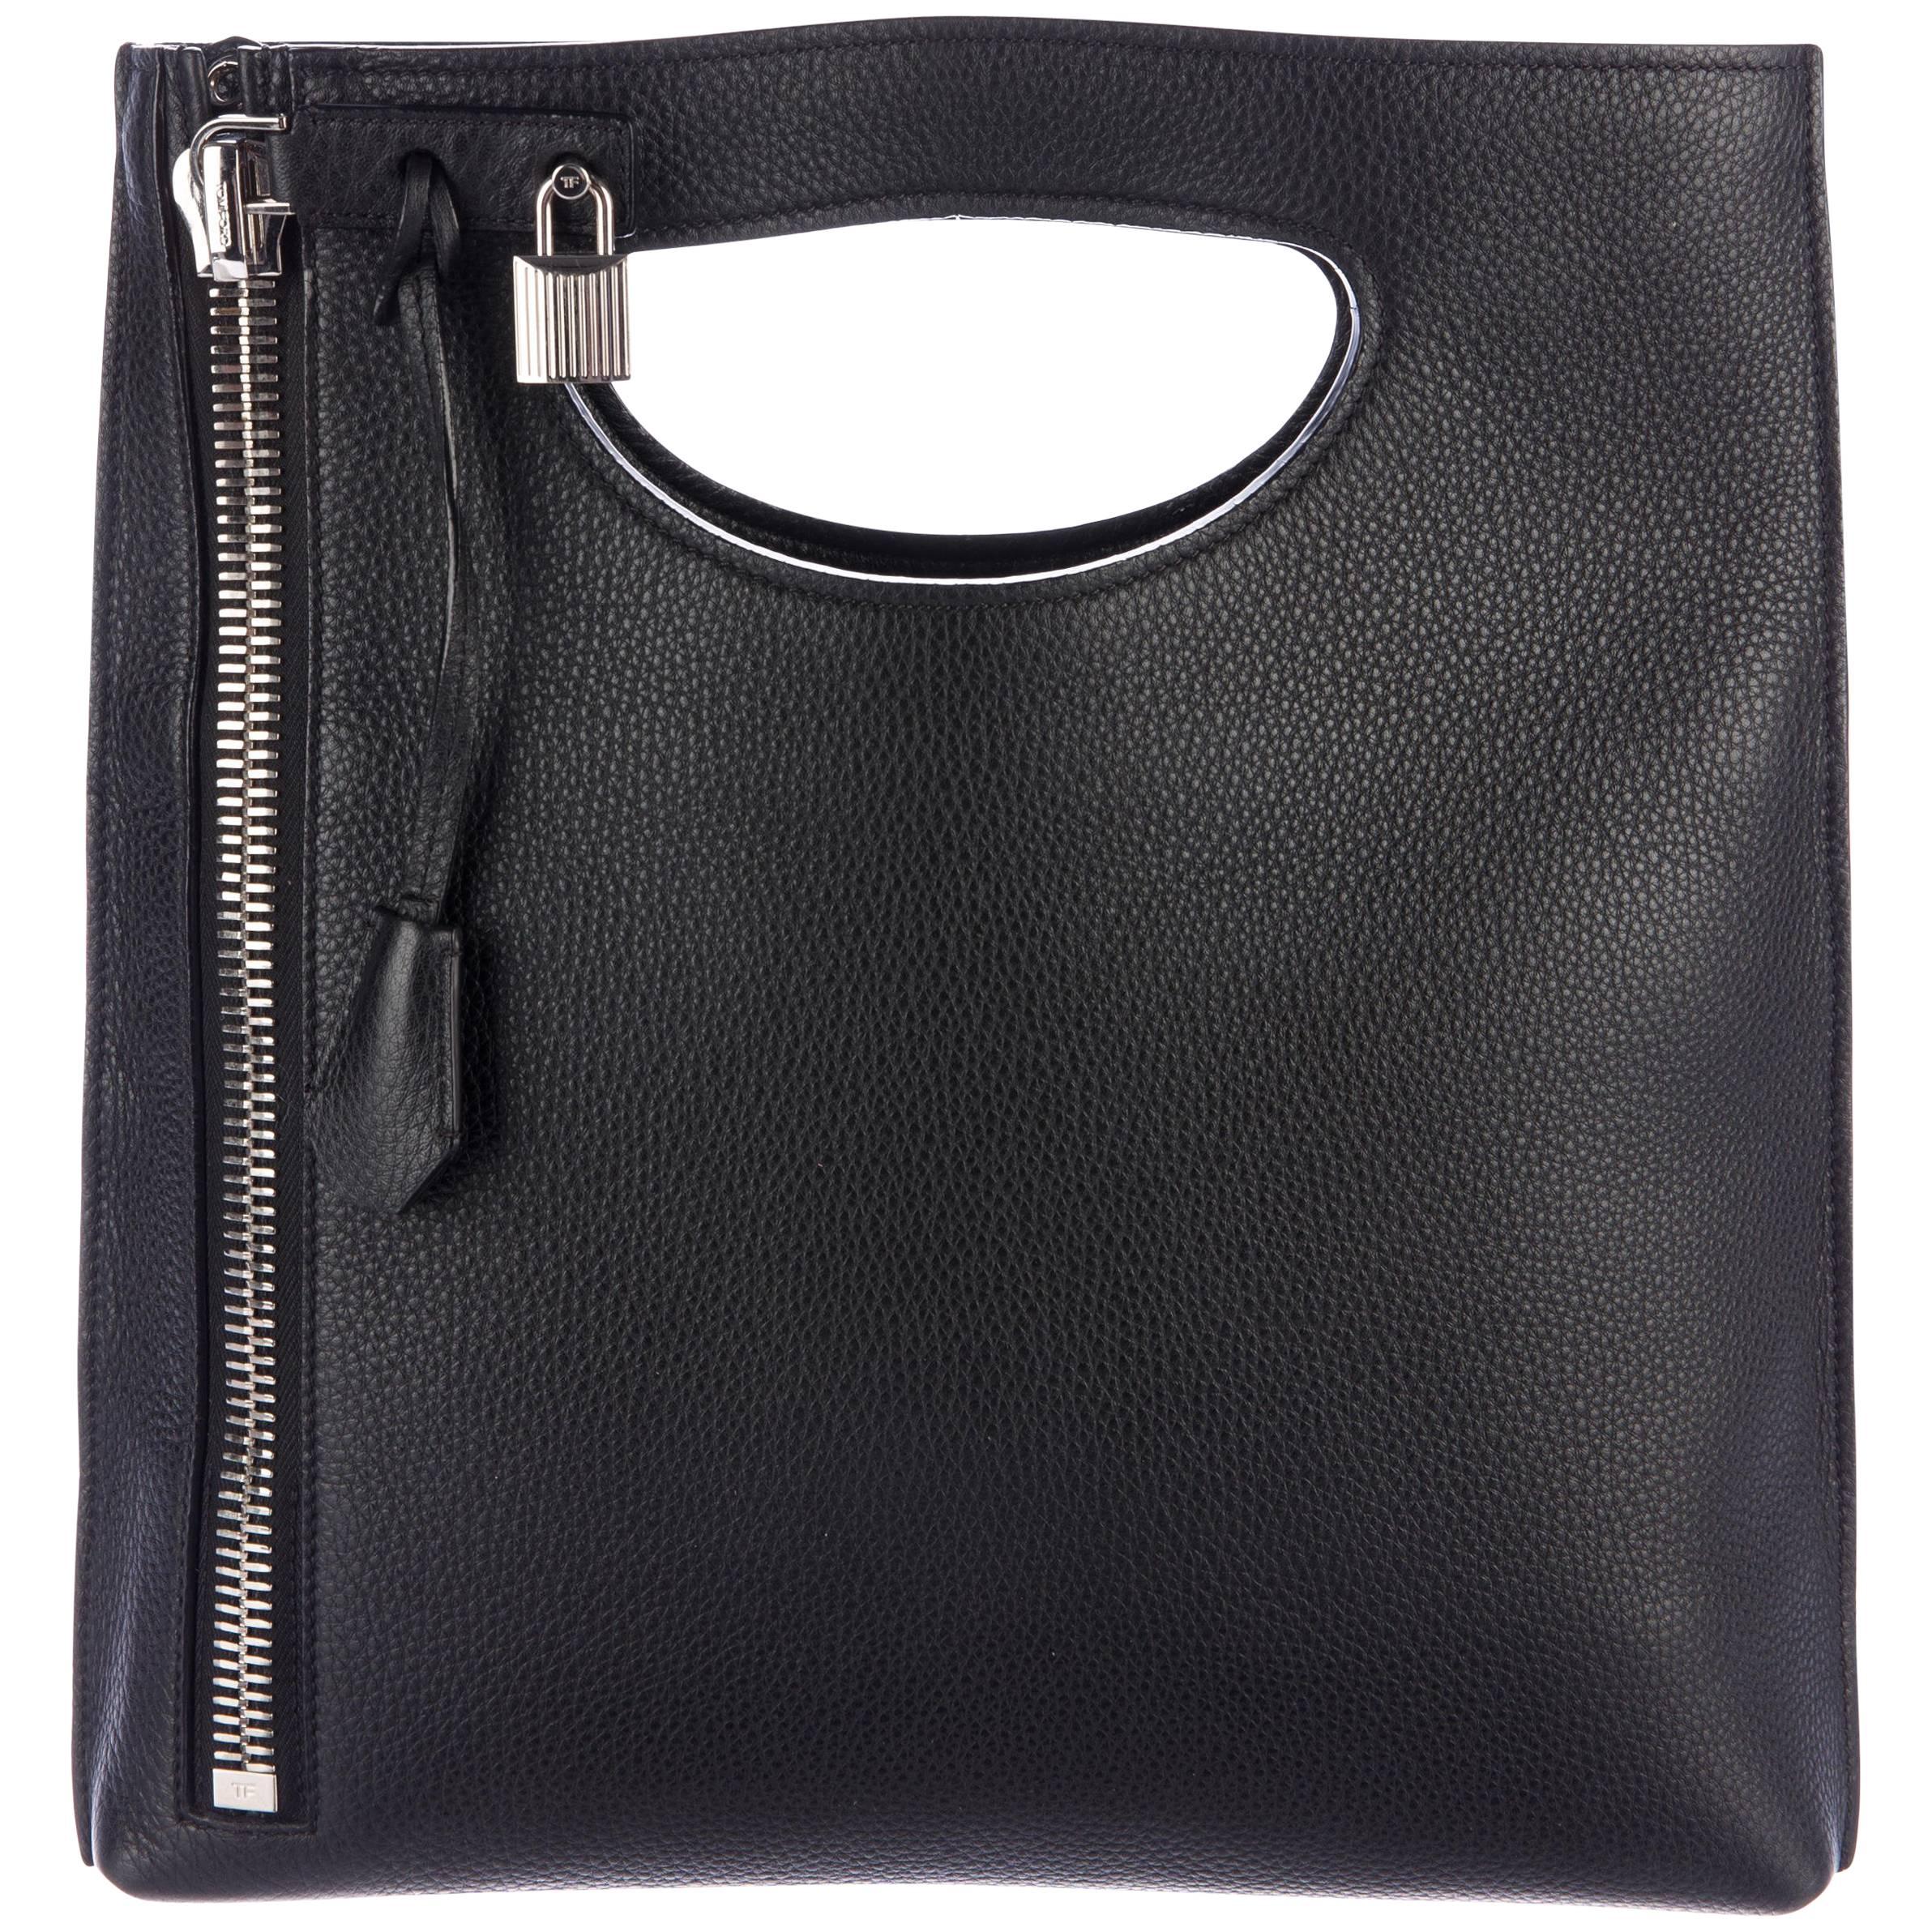 Tom Ford Black Leather Silver Lock 2 in 1 Evening Clutch Crossbody Shoulder Bag